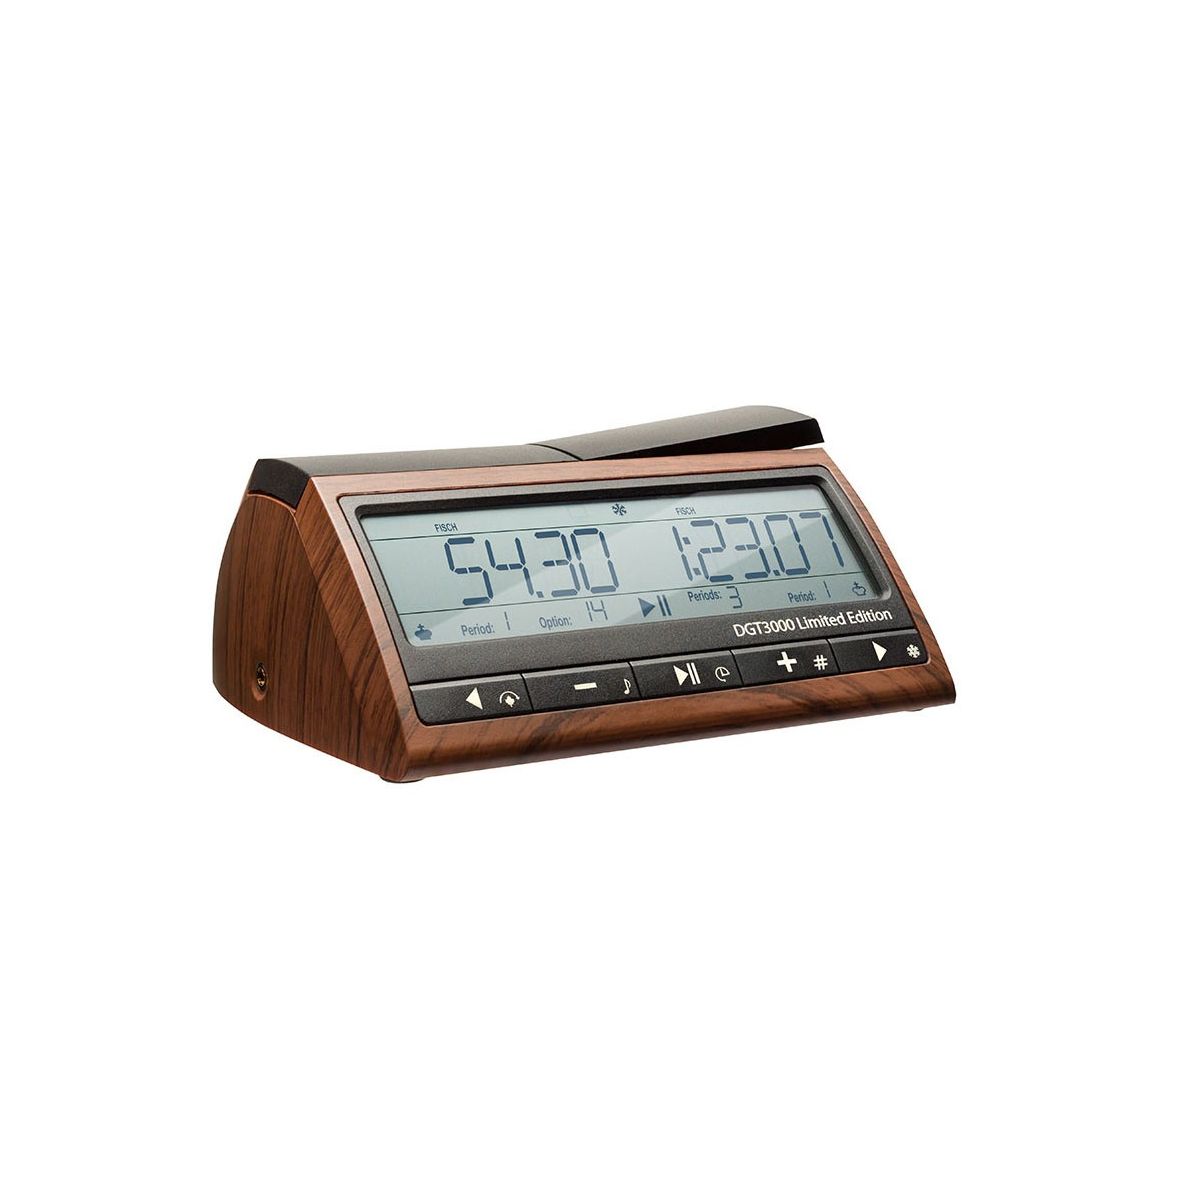 Reloj DGT 3000 Limited Edition